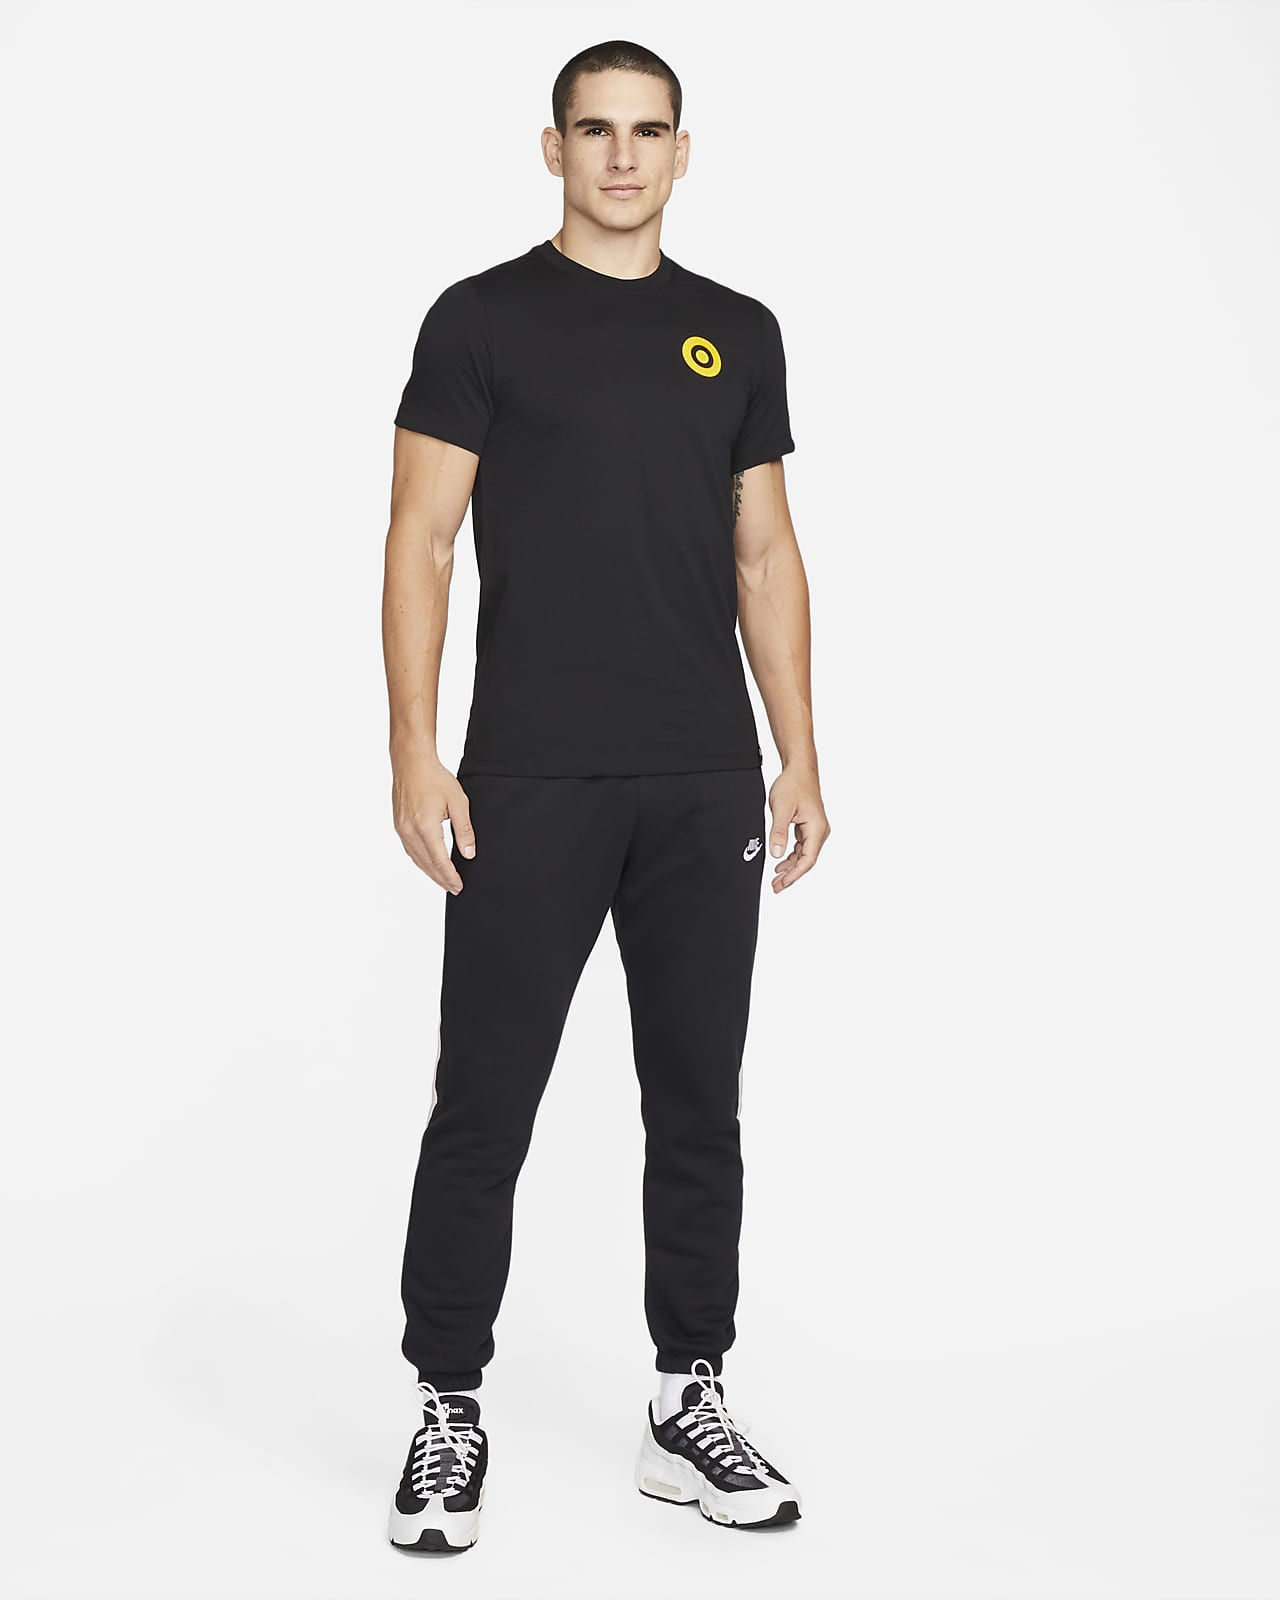 FC Men's T-Shirt. Nike.com